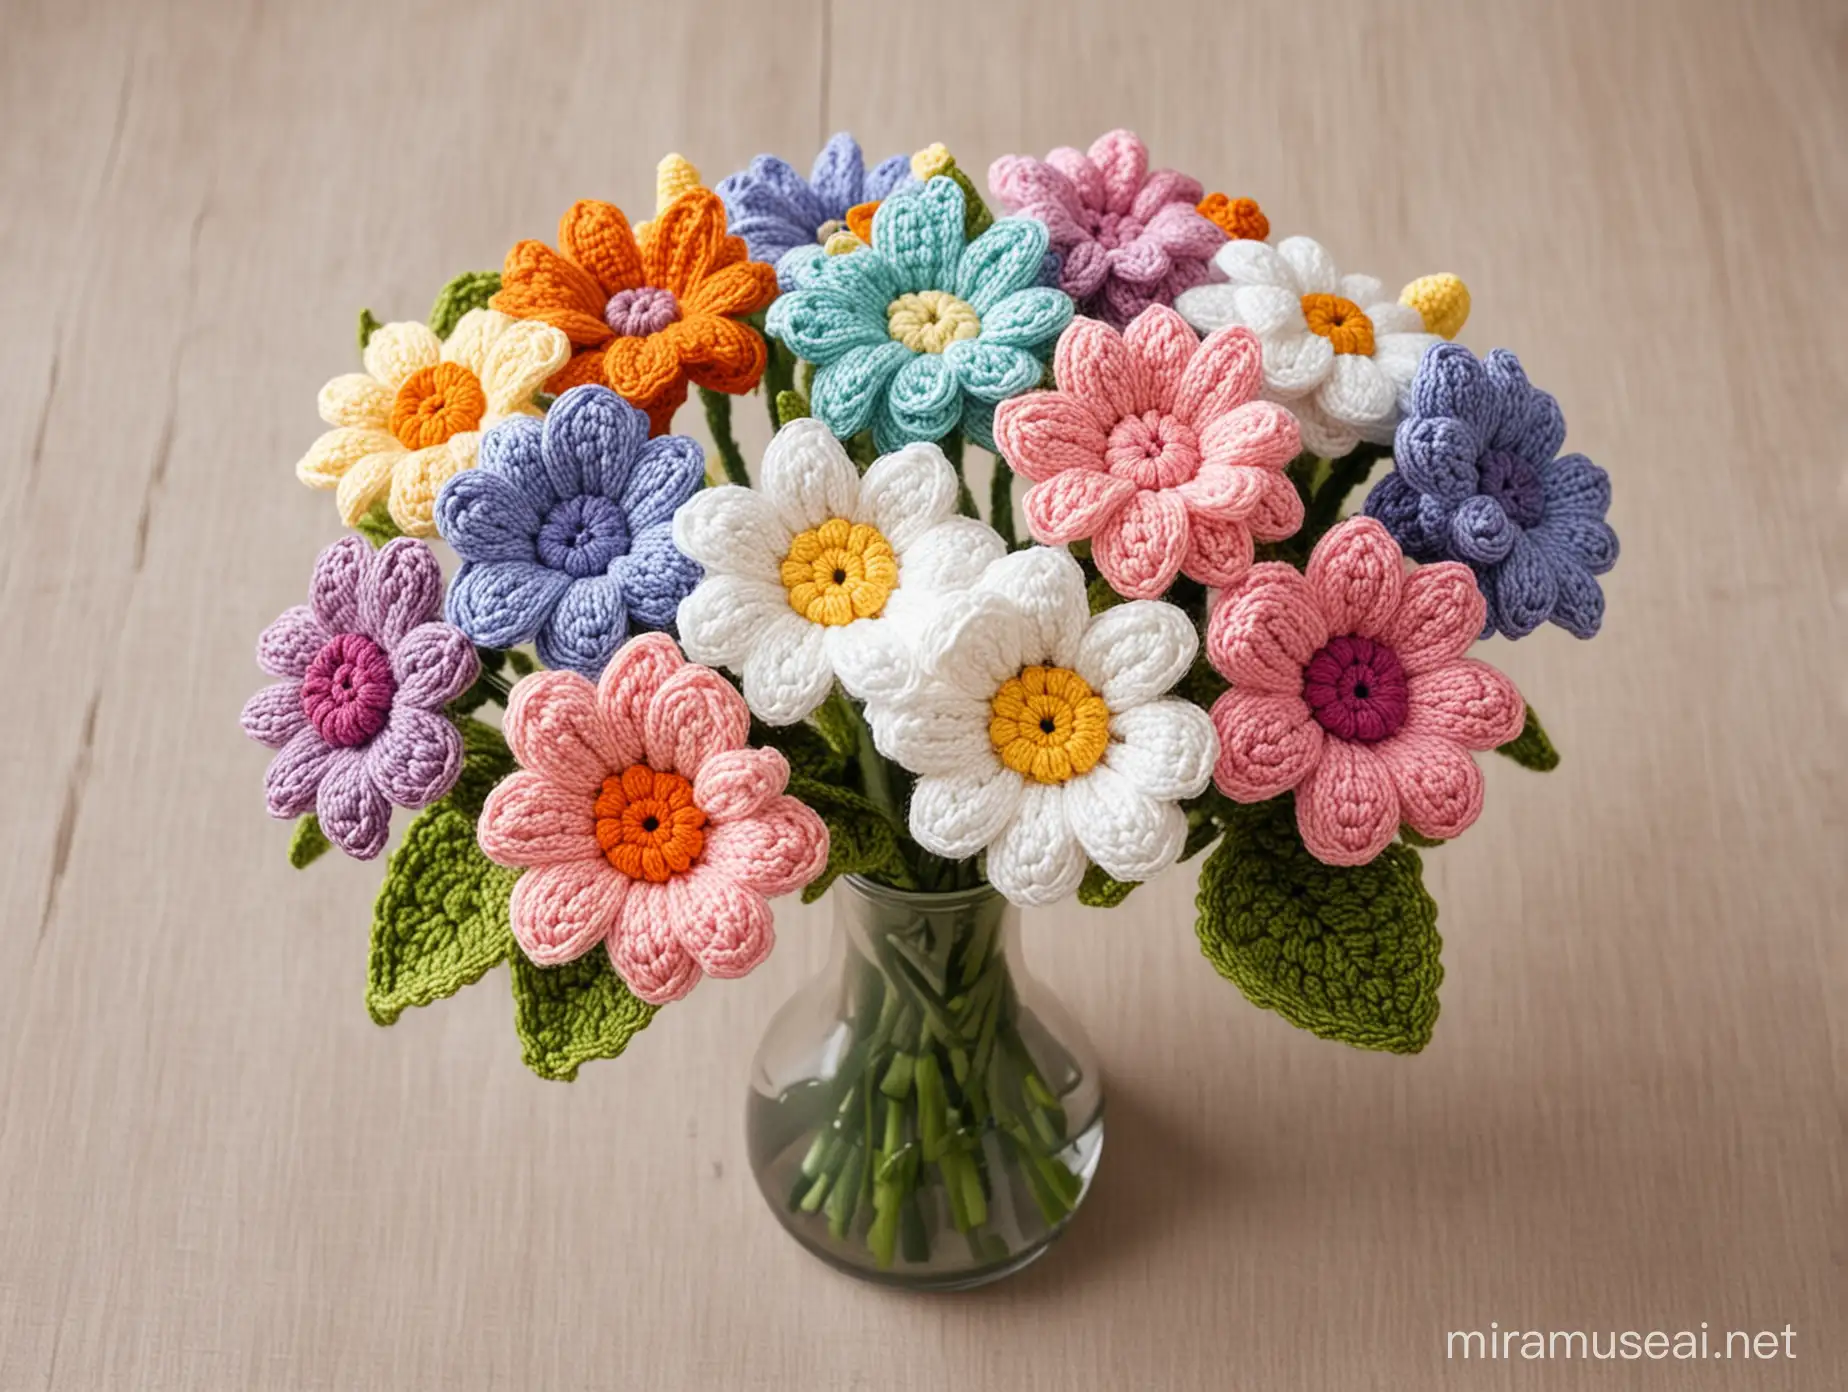 Colorful Crochet Flowers Bouquet for Home Decoration